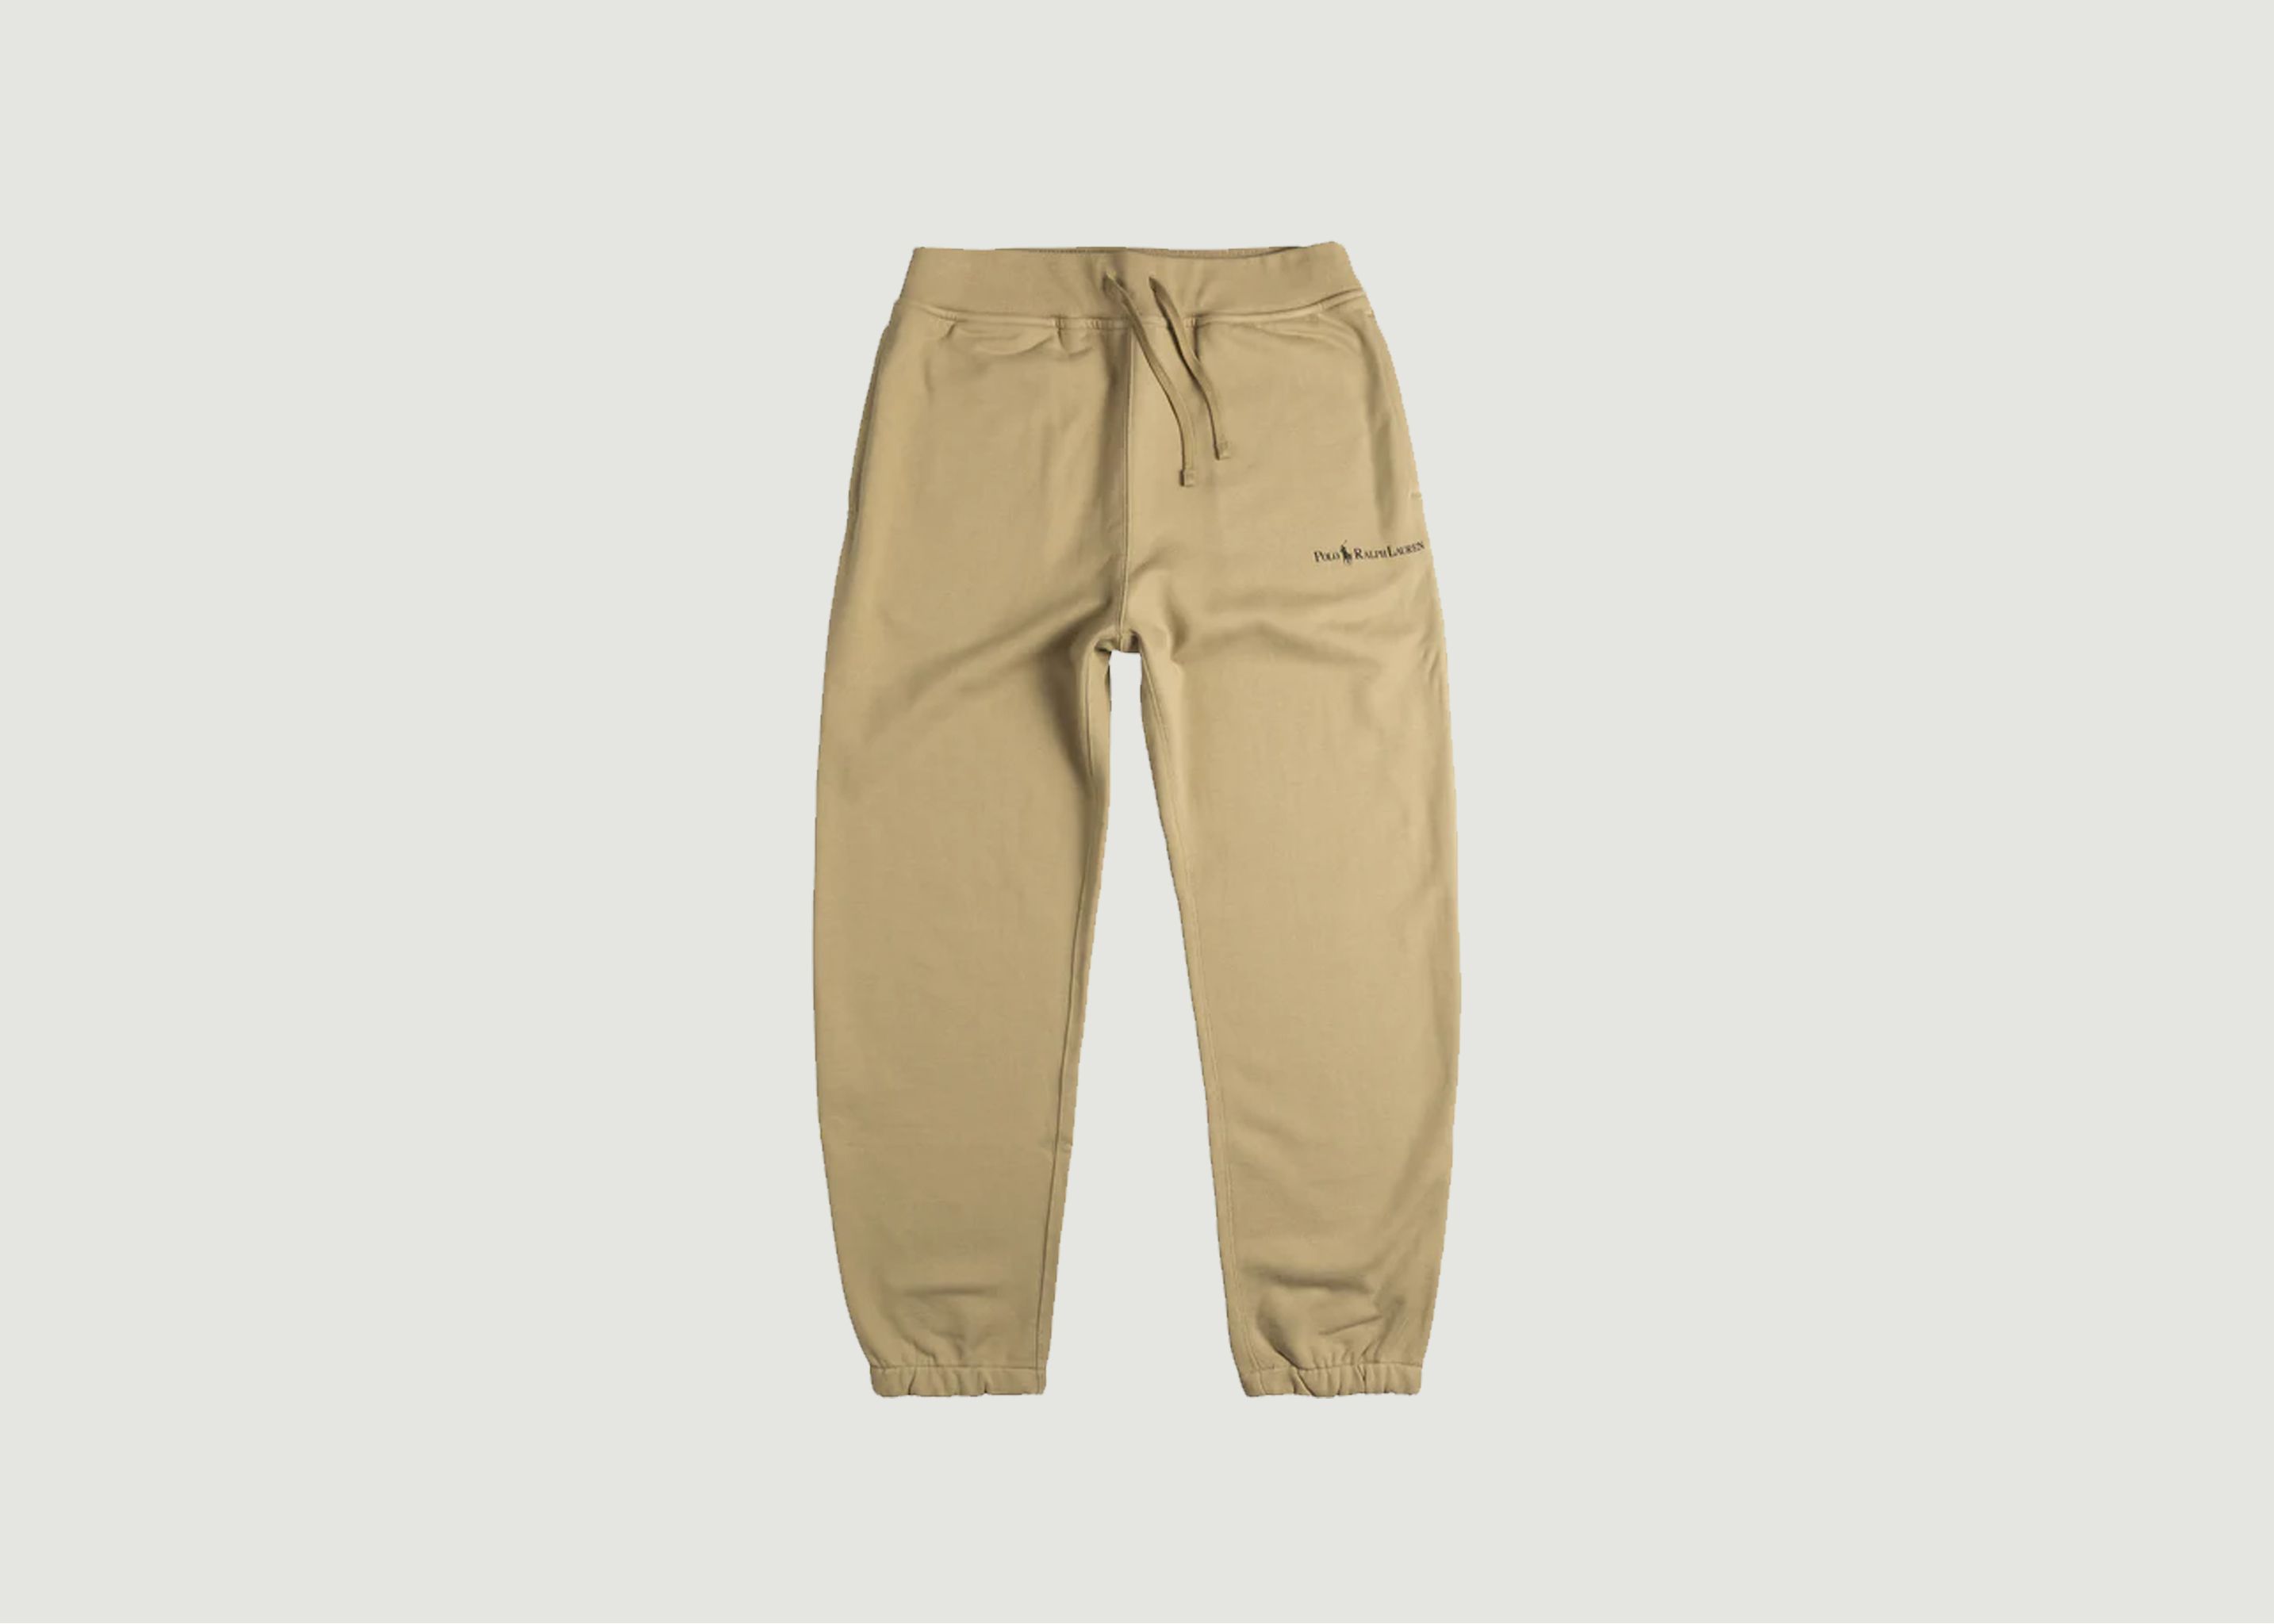 Pantalon de jogging  - Polo Ralph Lauren